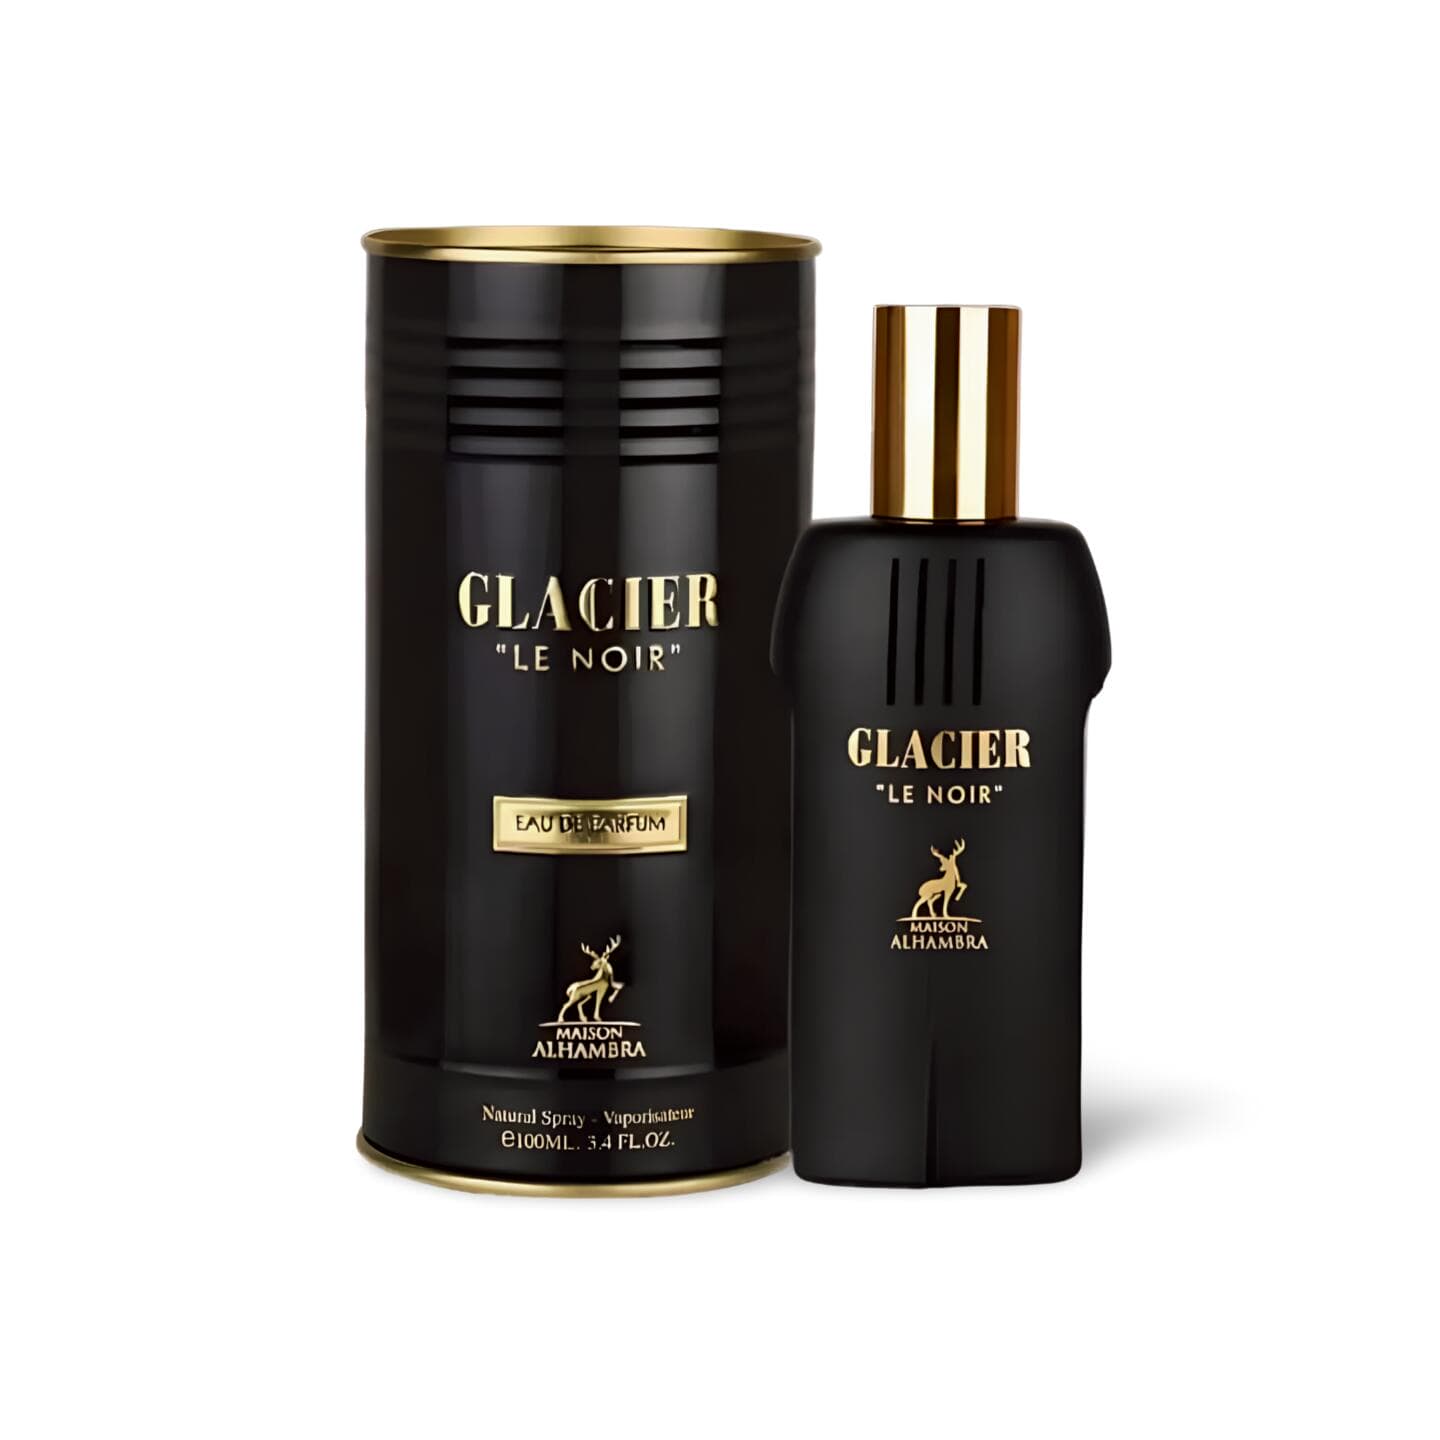 Glacier Le Noir Perfume